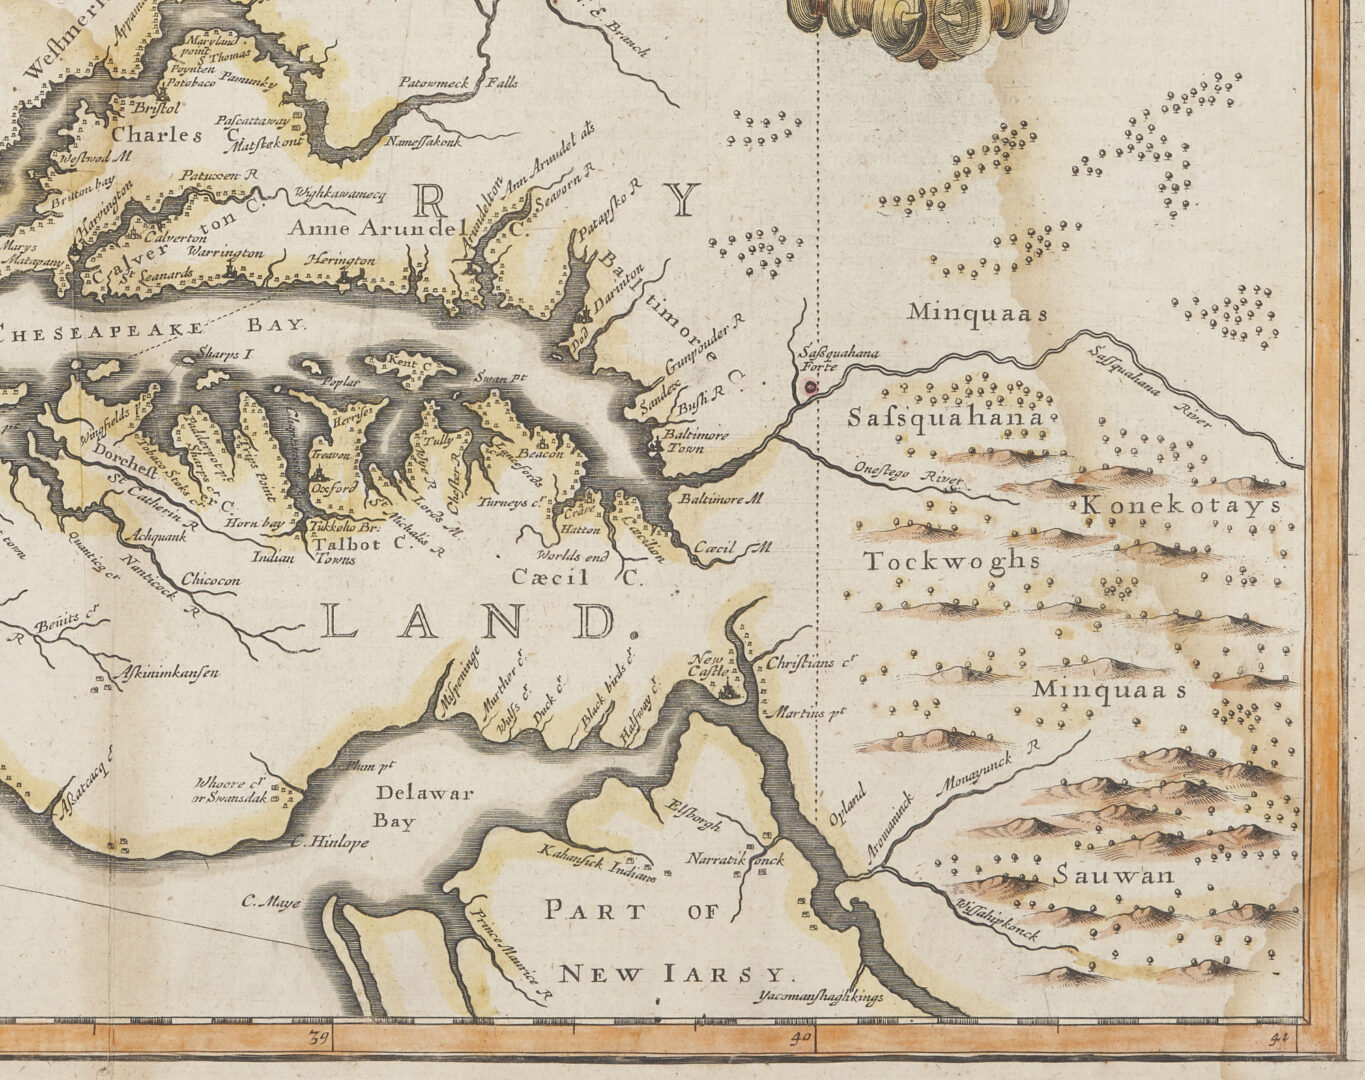 Lot 553: John Speed 1676 Map of Virginia, Maryland, and Chesapeake Bay